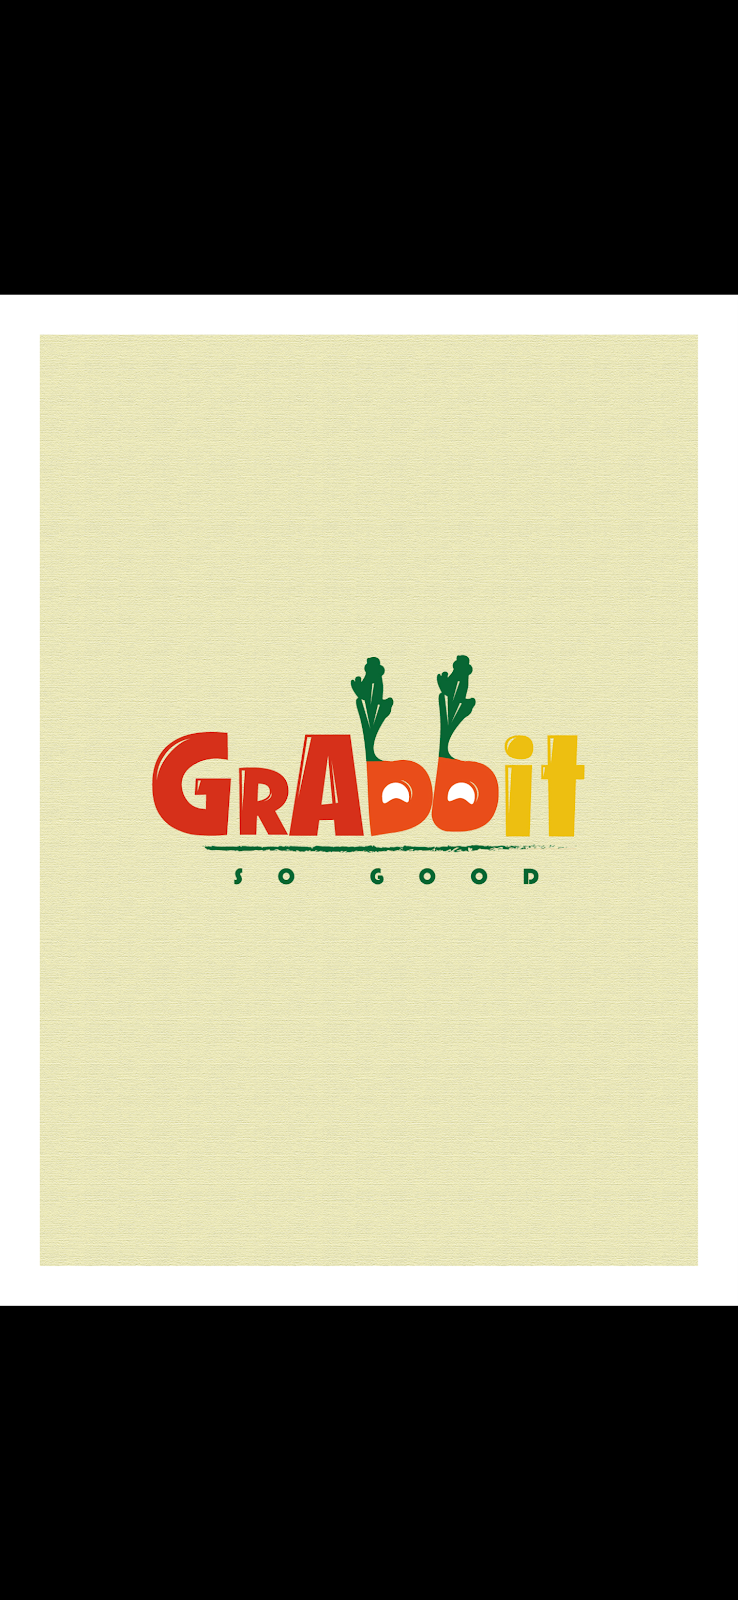 Grabbit Food Truck